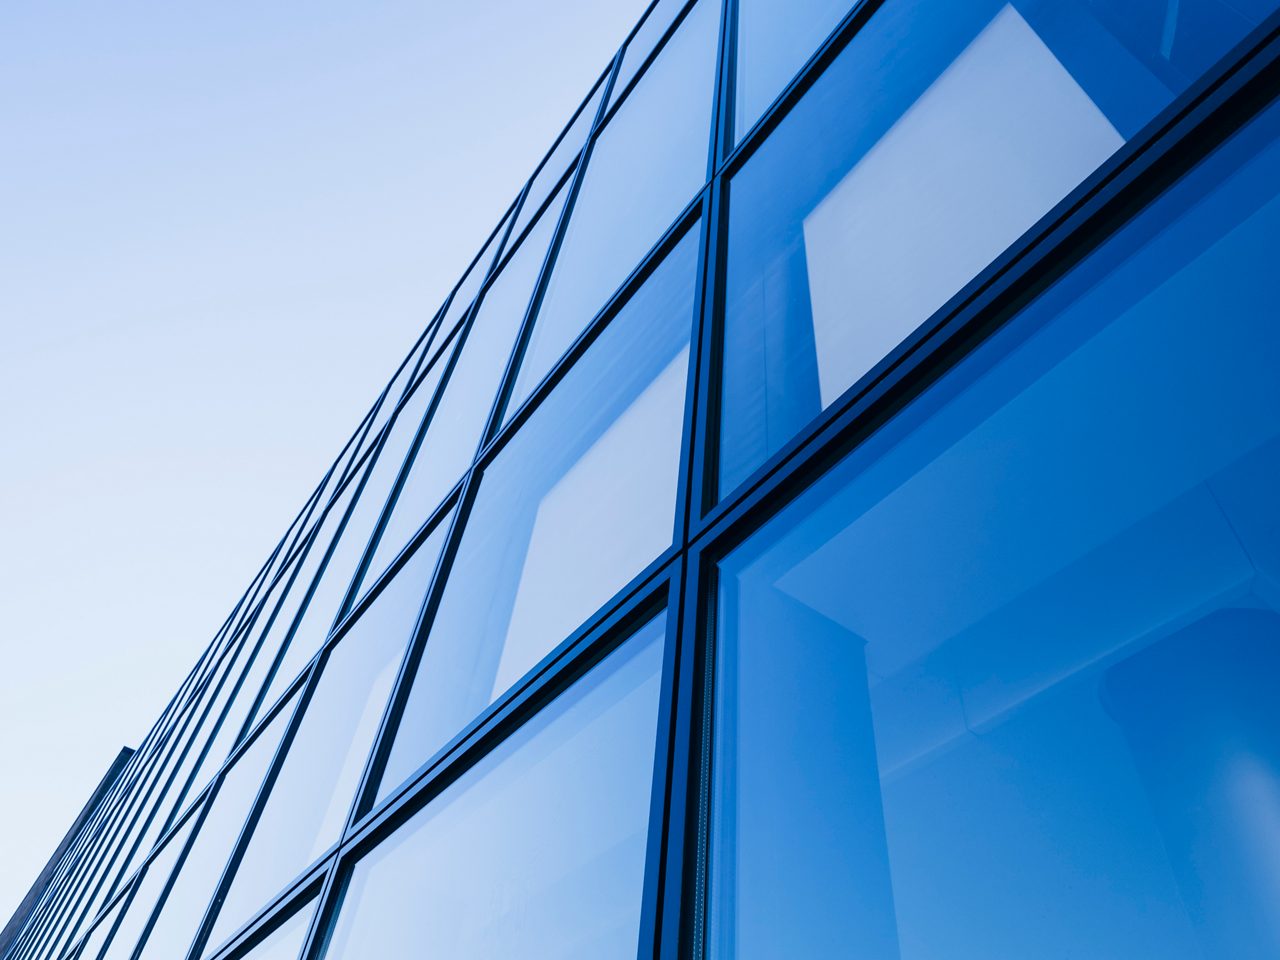 Architecture detail Modern Glass facade Blue tone 